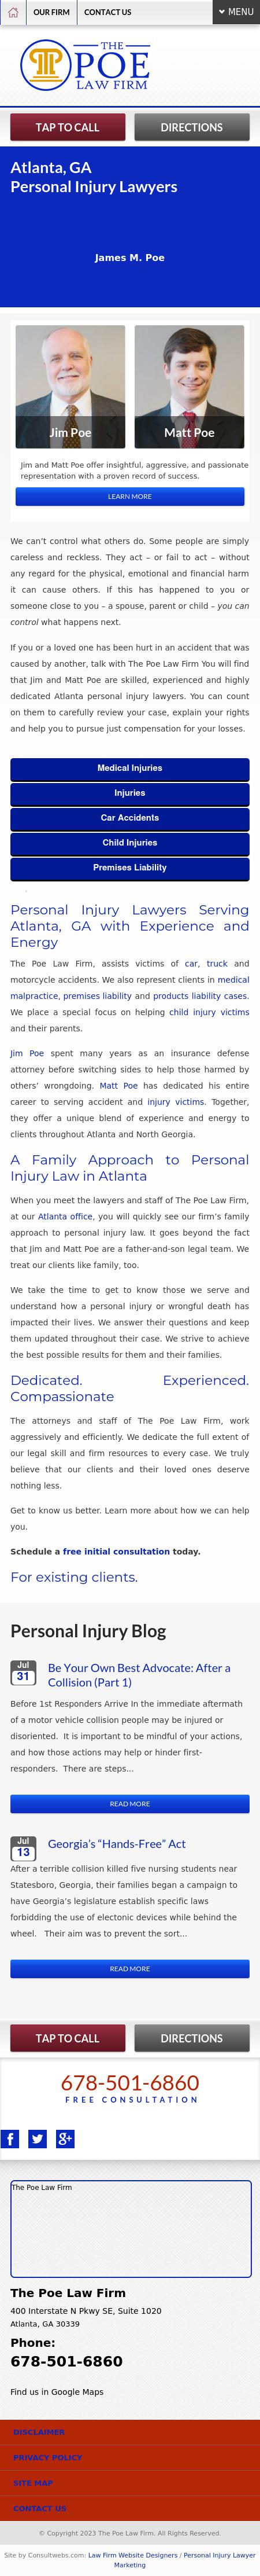 James M. Poe PC - Atlanta GA Lawyers